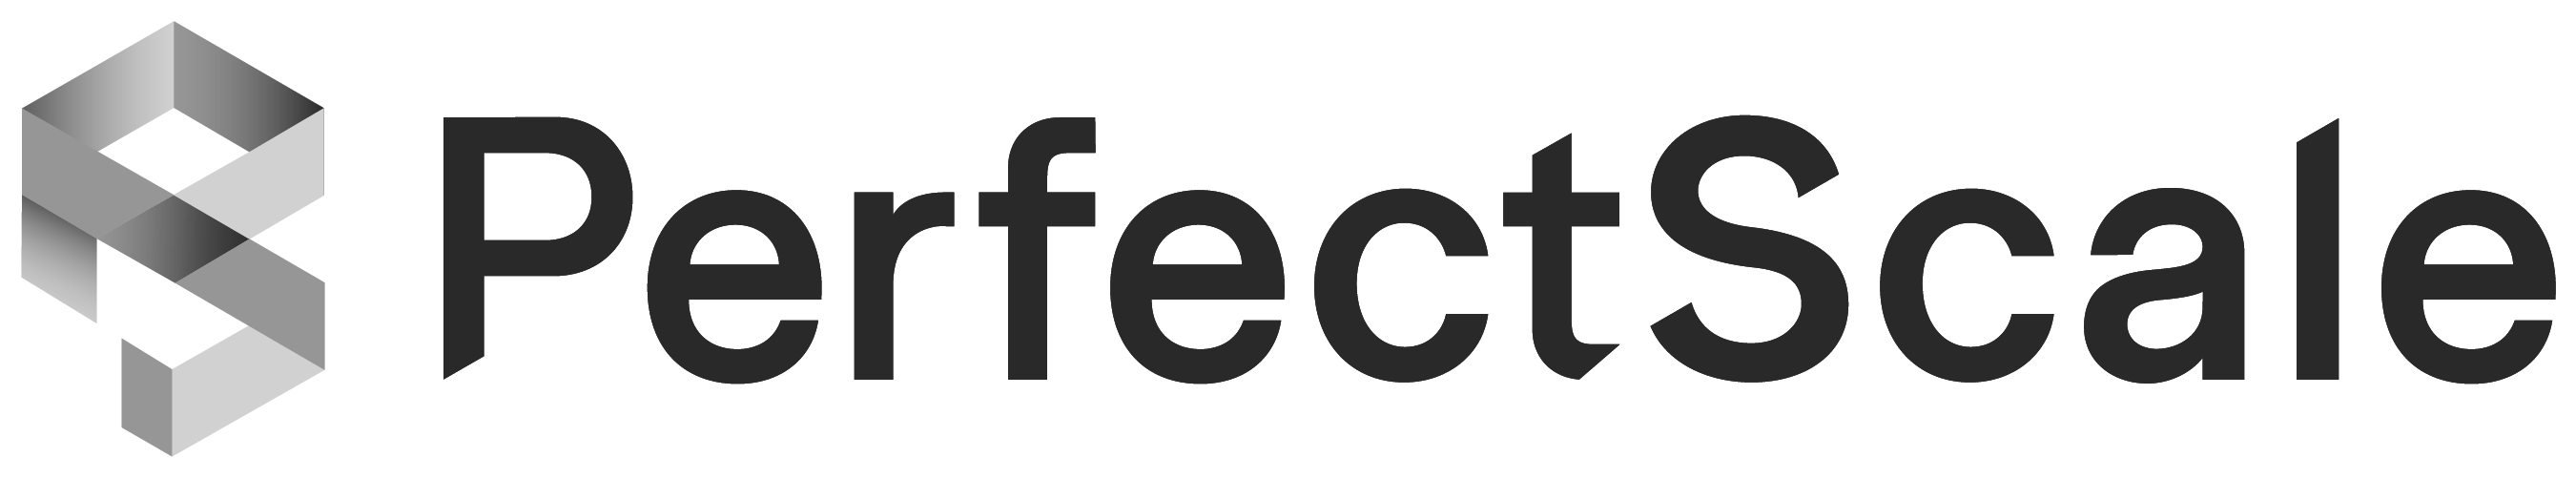 PerfectScale logo